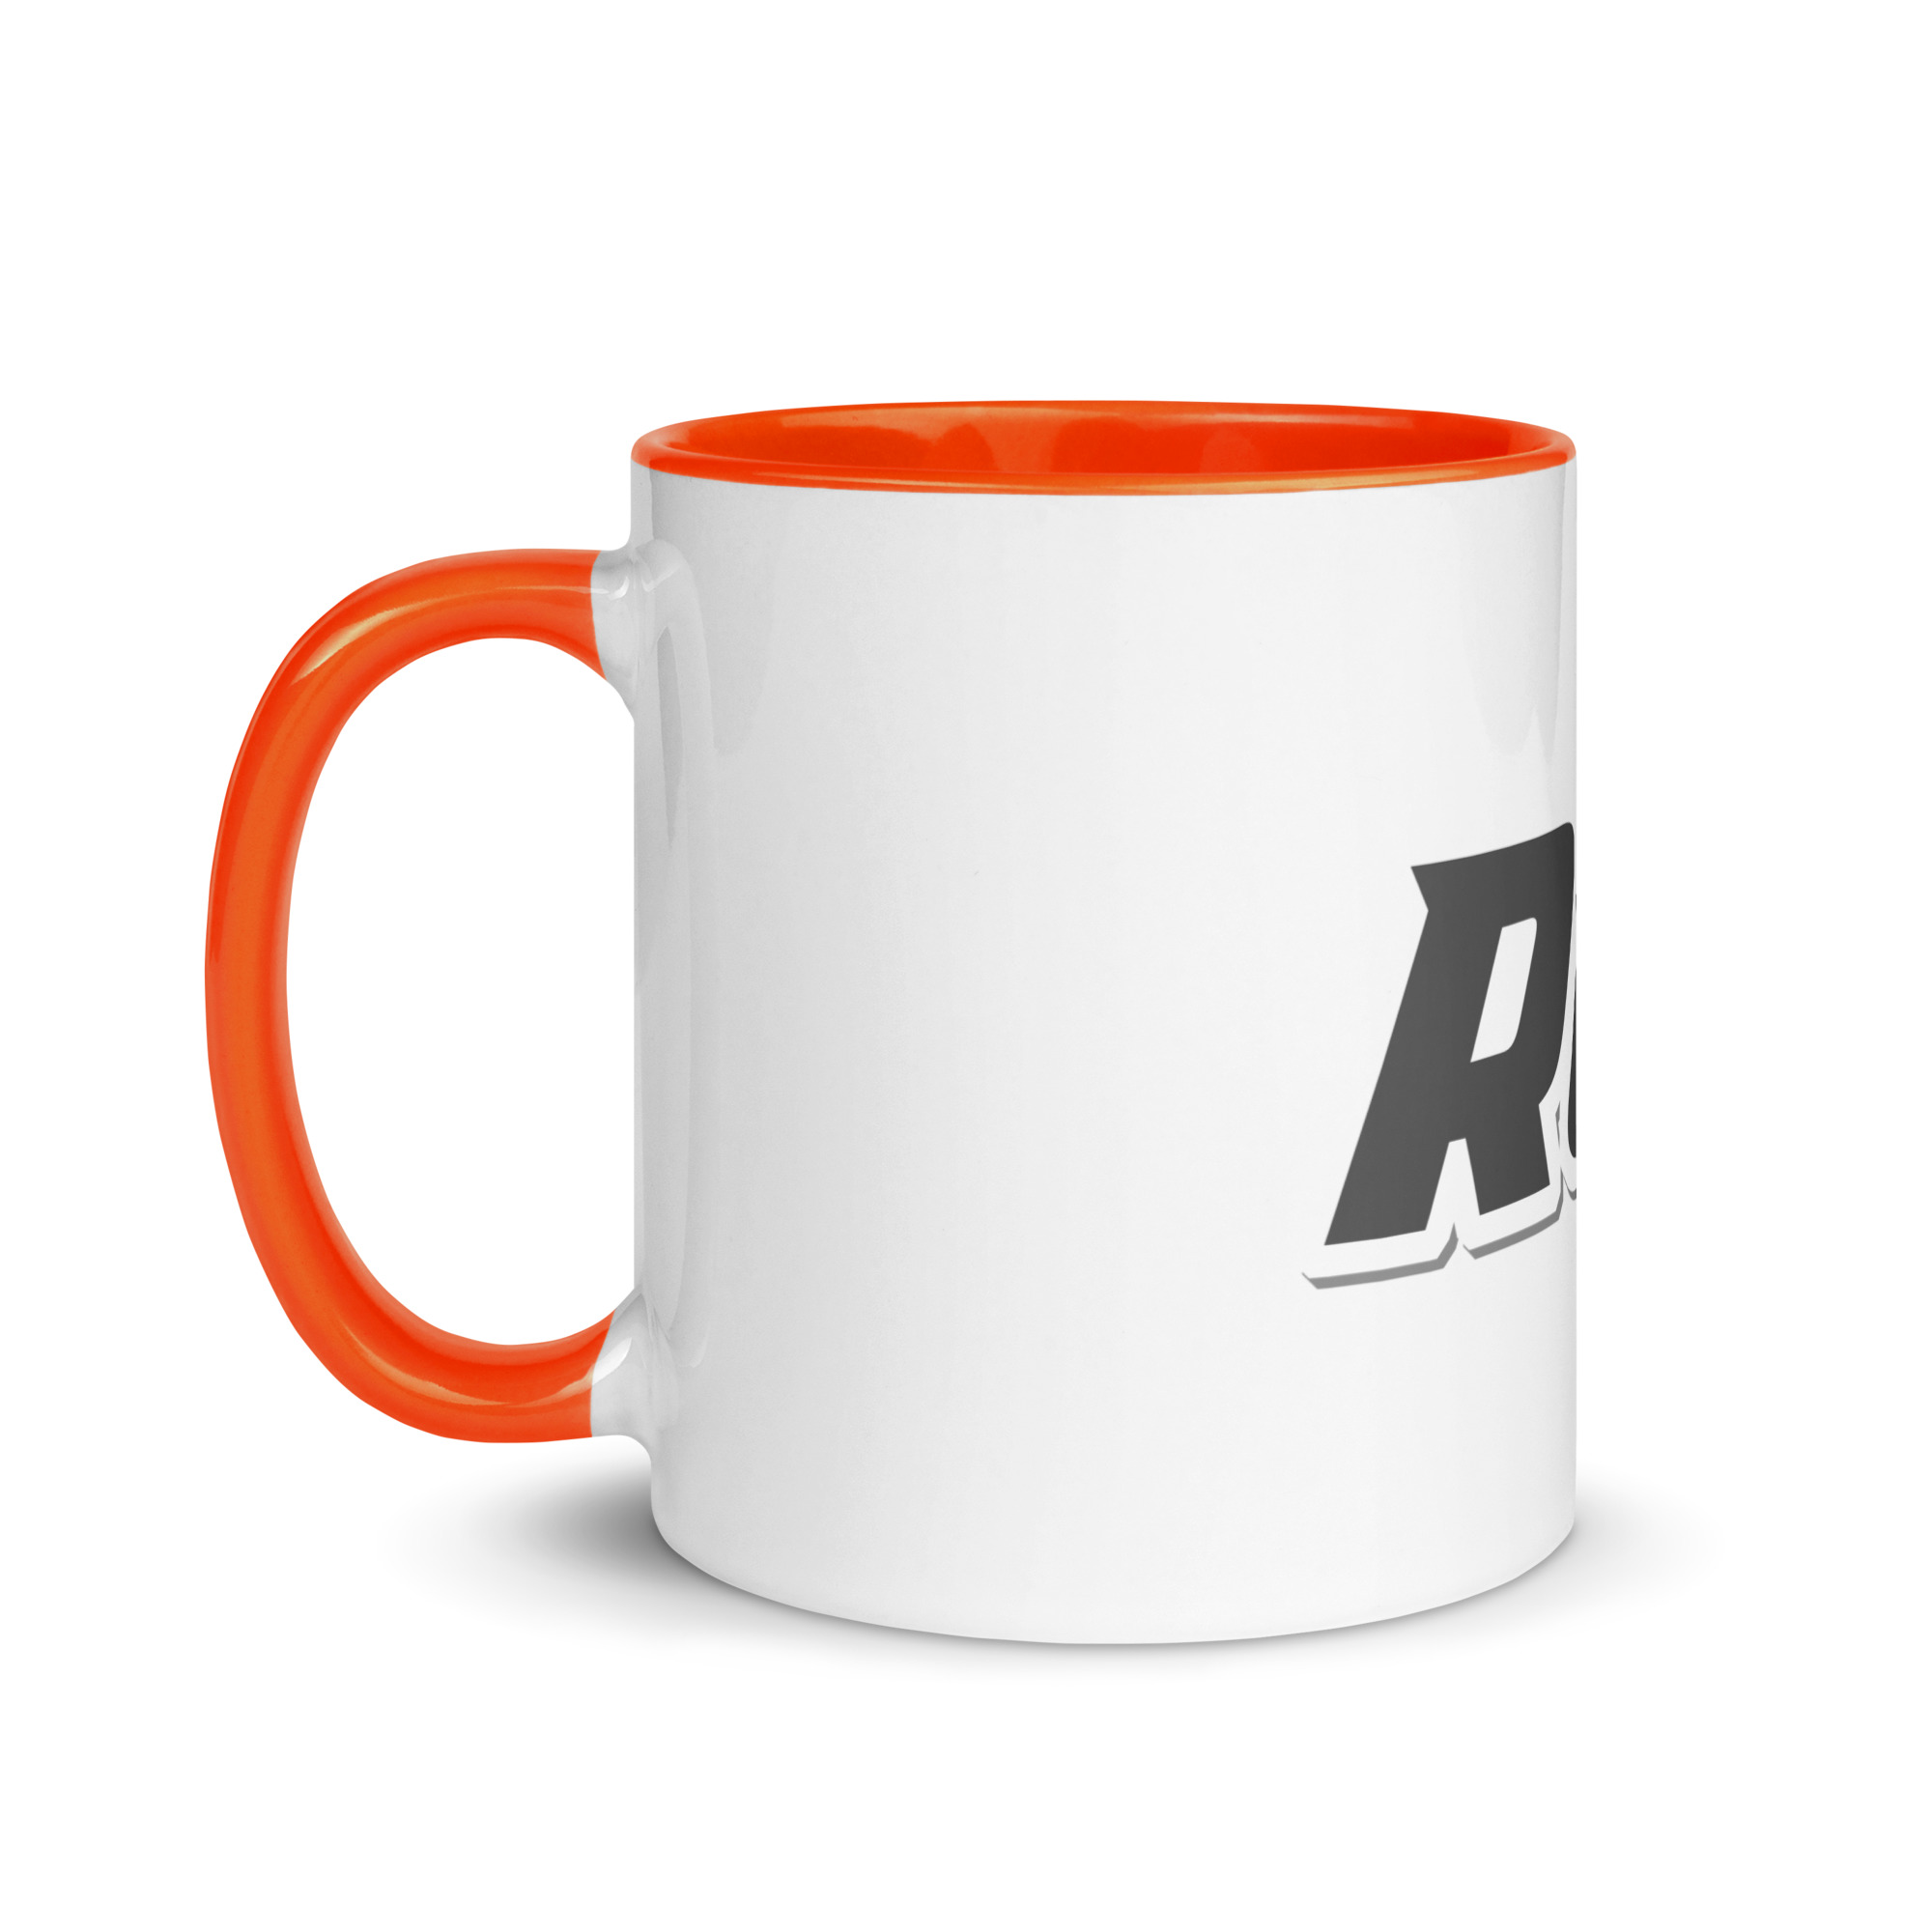 white-ceramic-mug-with-color-inside-orange-11-oz-left-6525b6484c6c0.jpg